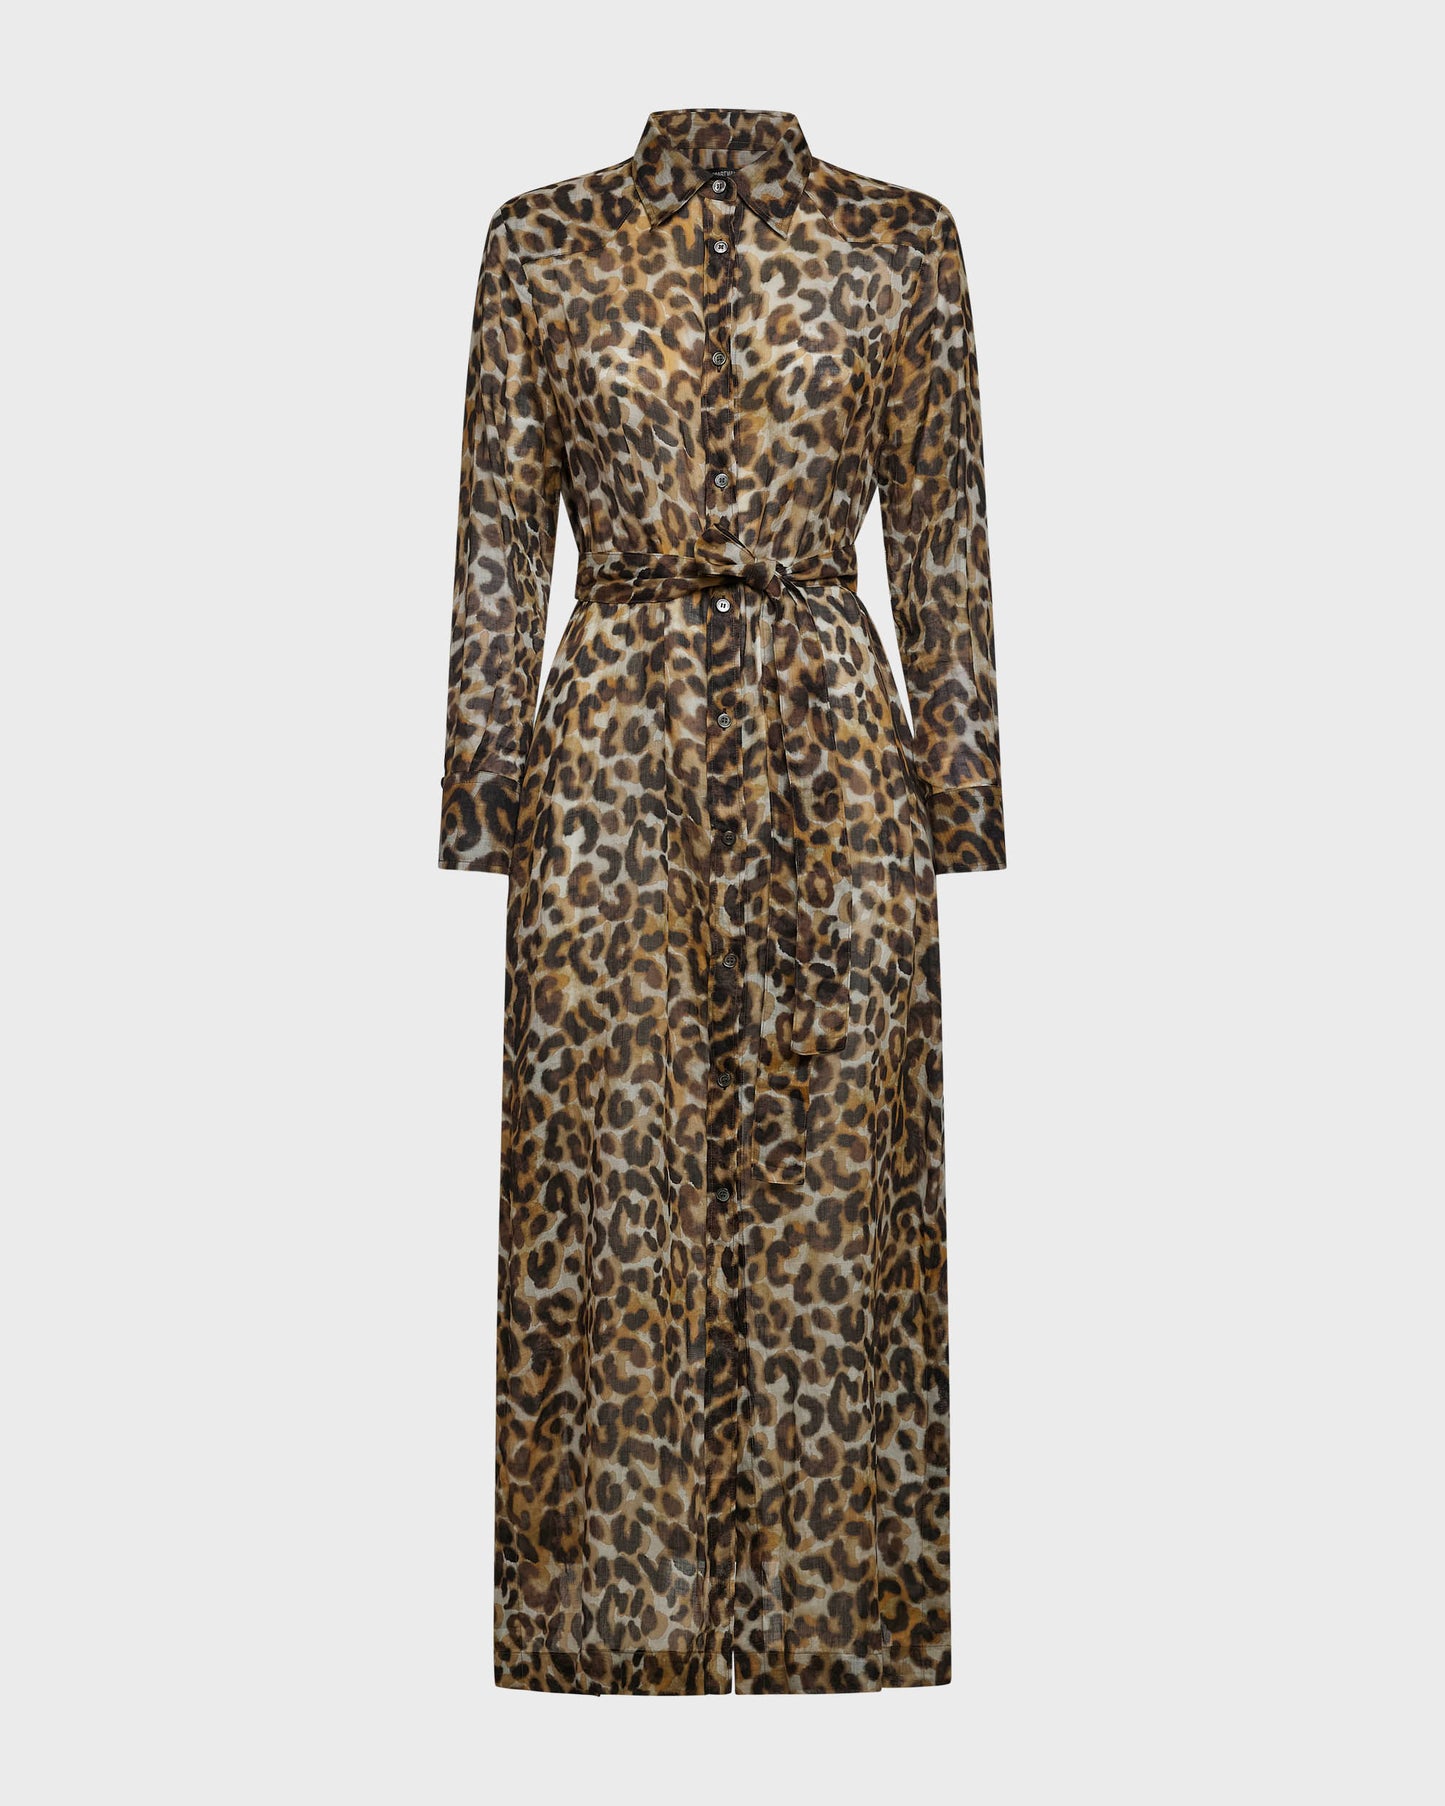 Rosaline abito chemisier leopardato